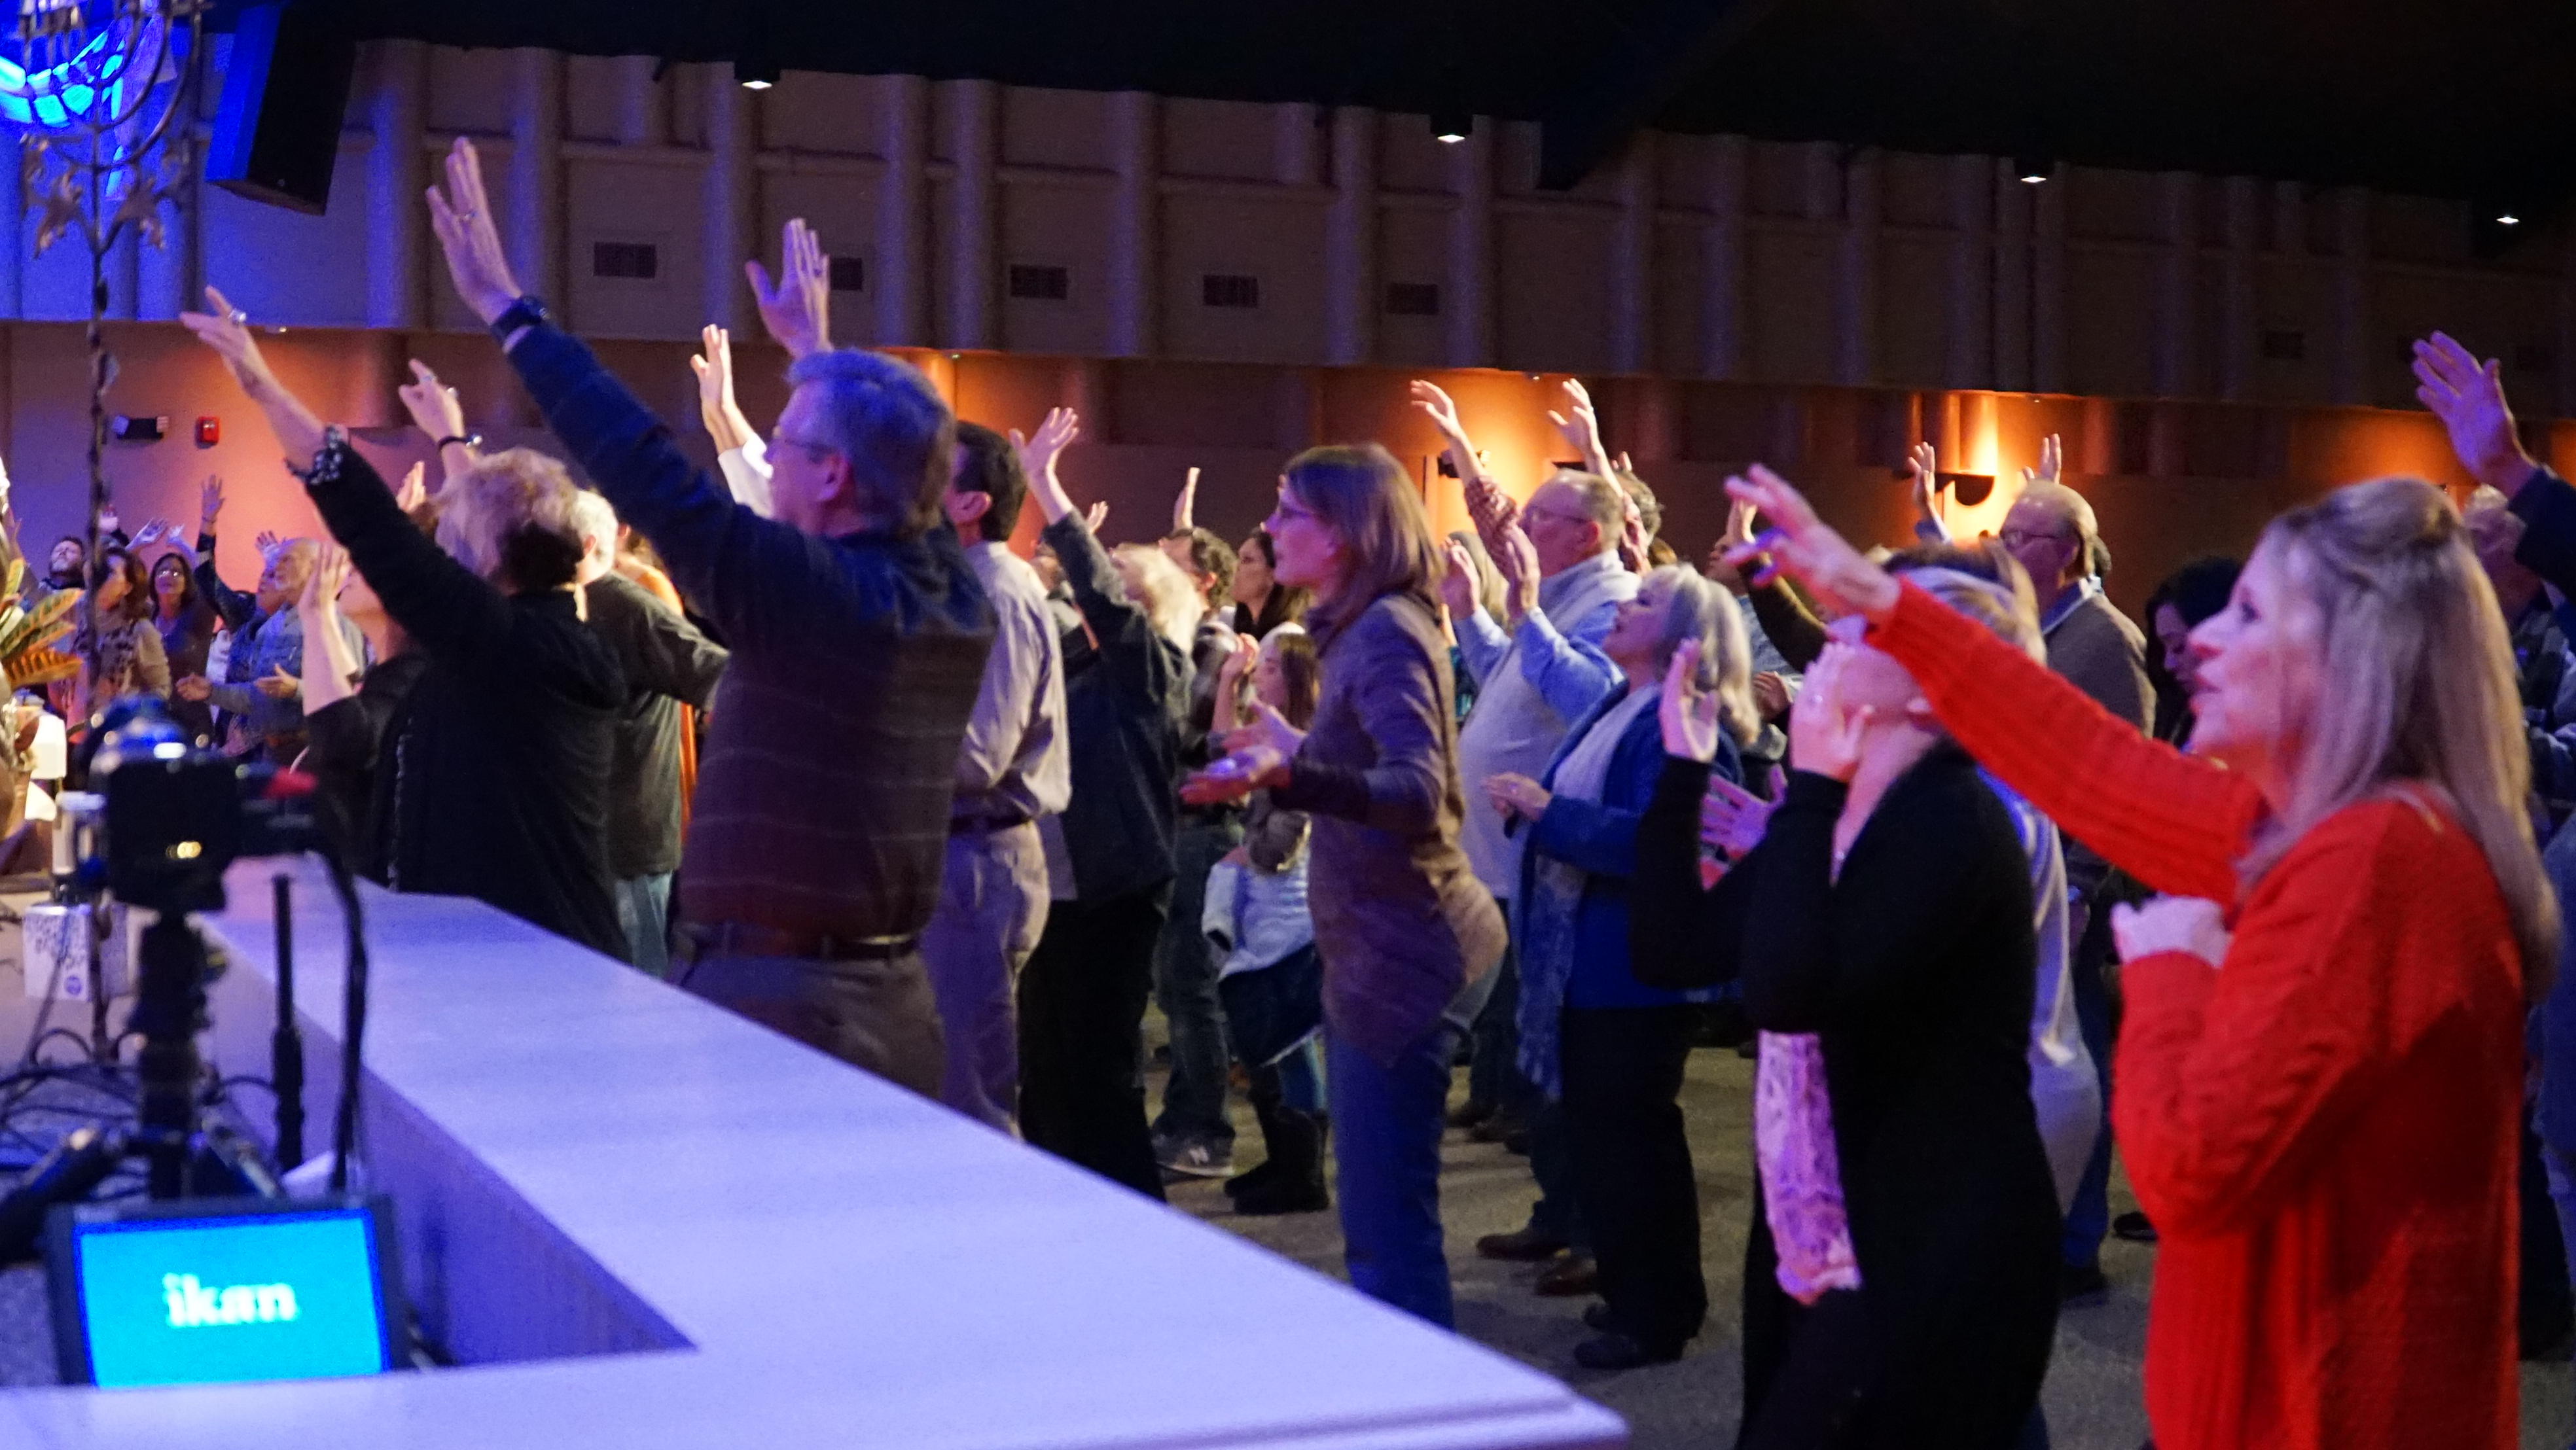 CLM hands raise worship sing prayer fellowship hall